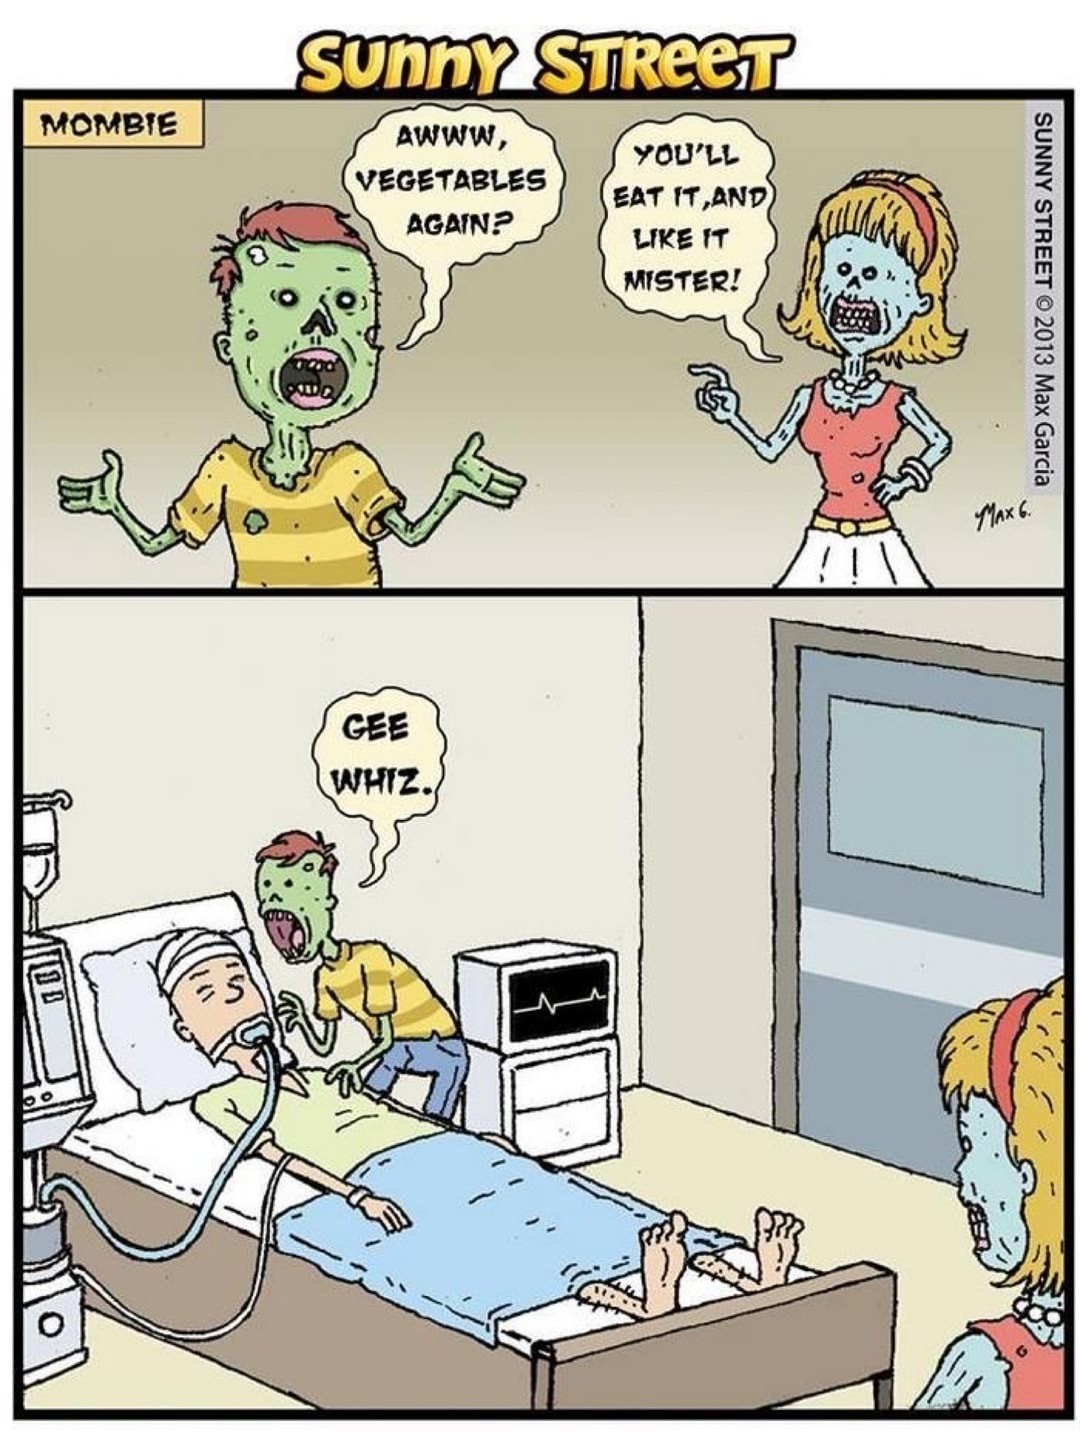 Vegan zombies? - meme